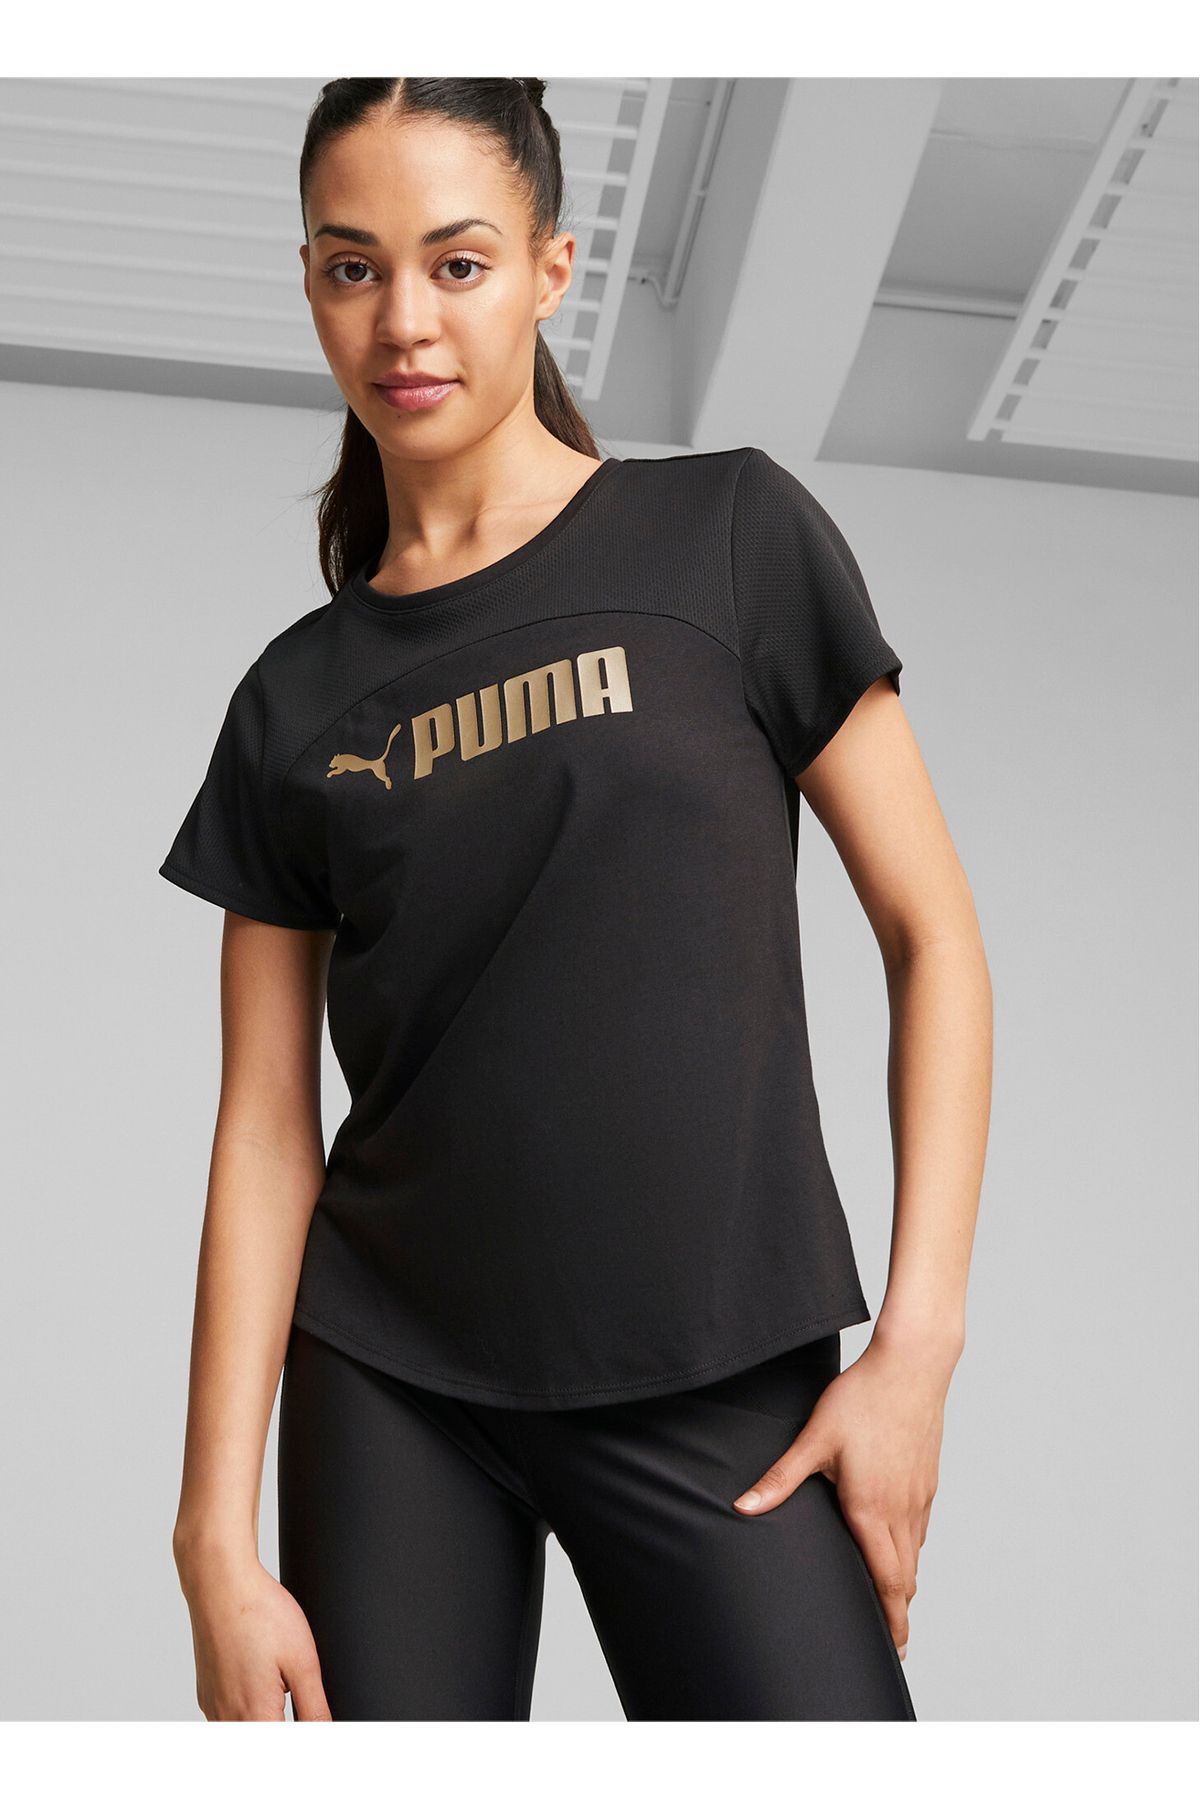 Puma Siyah Kadın Yuvarlak Yaka T-shirt 52384451 Fıt Ultrabreathe Tee